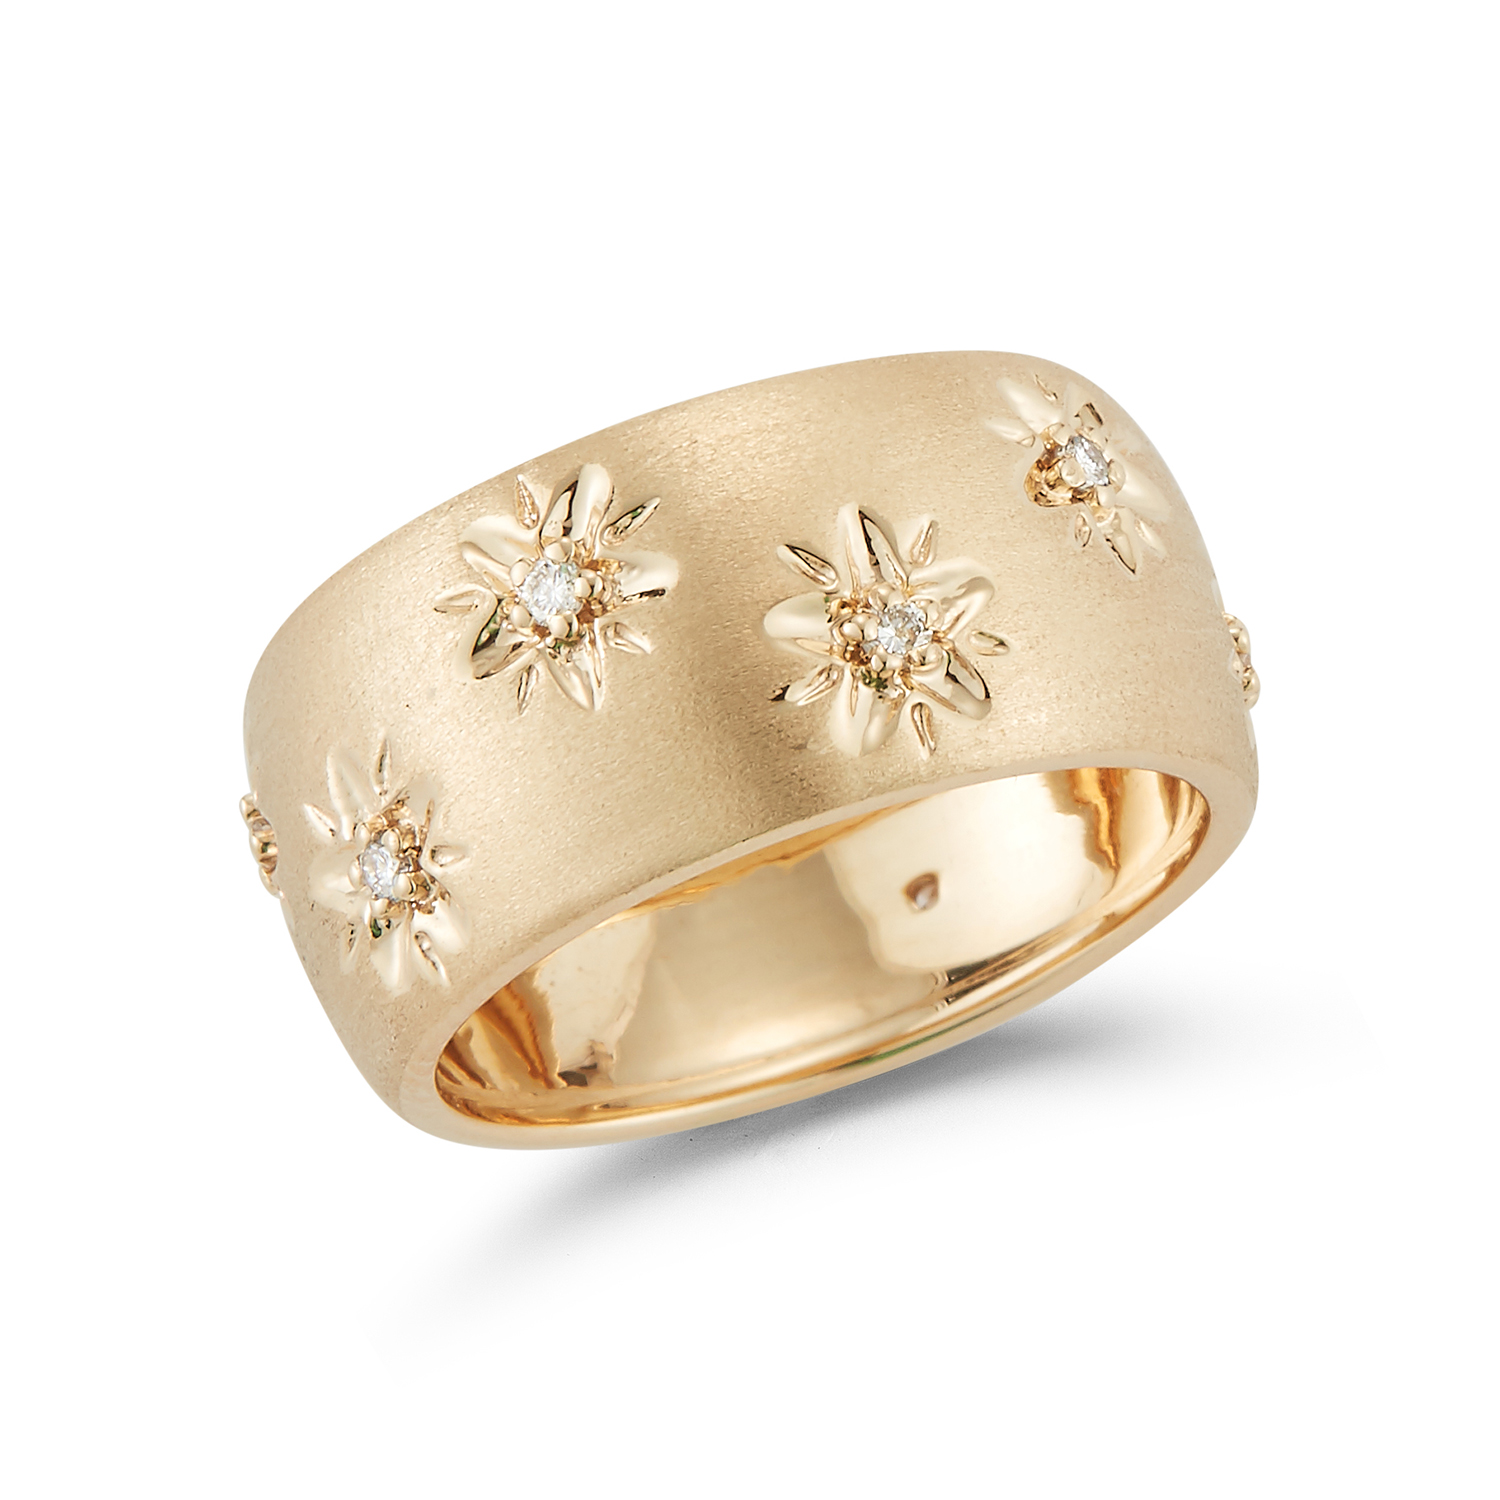 Barbela Design Skye 14K Yellow Gold Diamond Ring (1/6 TCW)